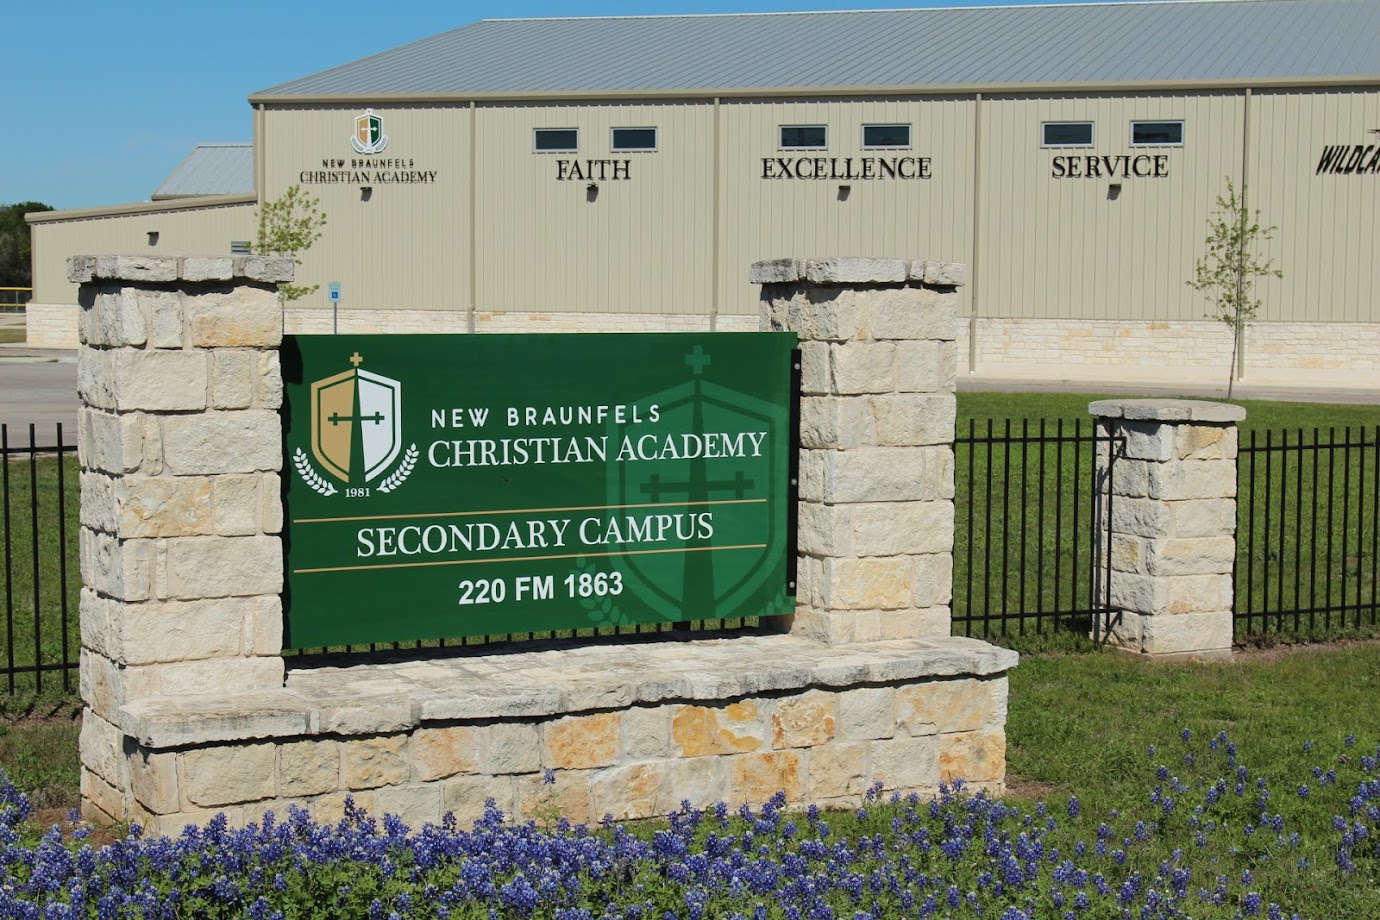 New Braunfels Christian Academy